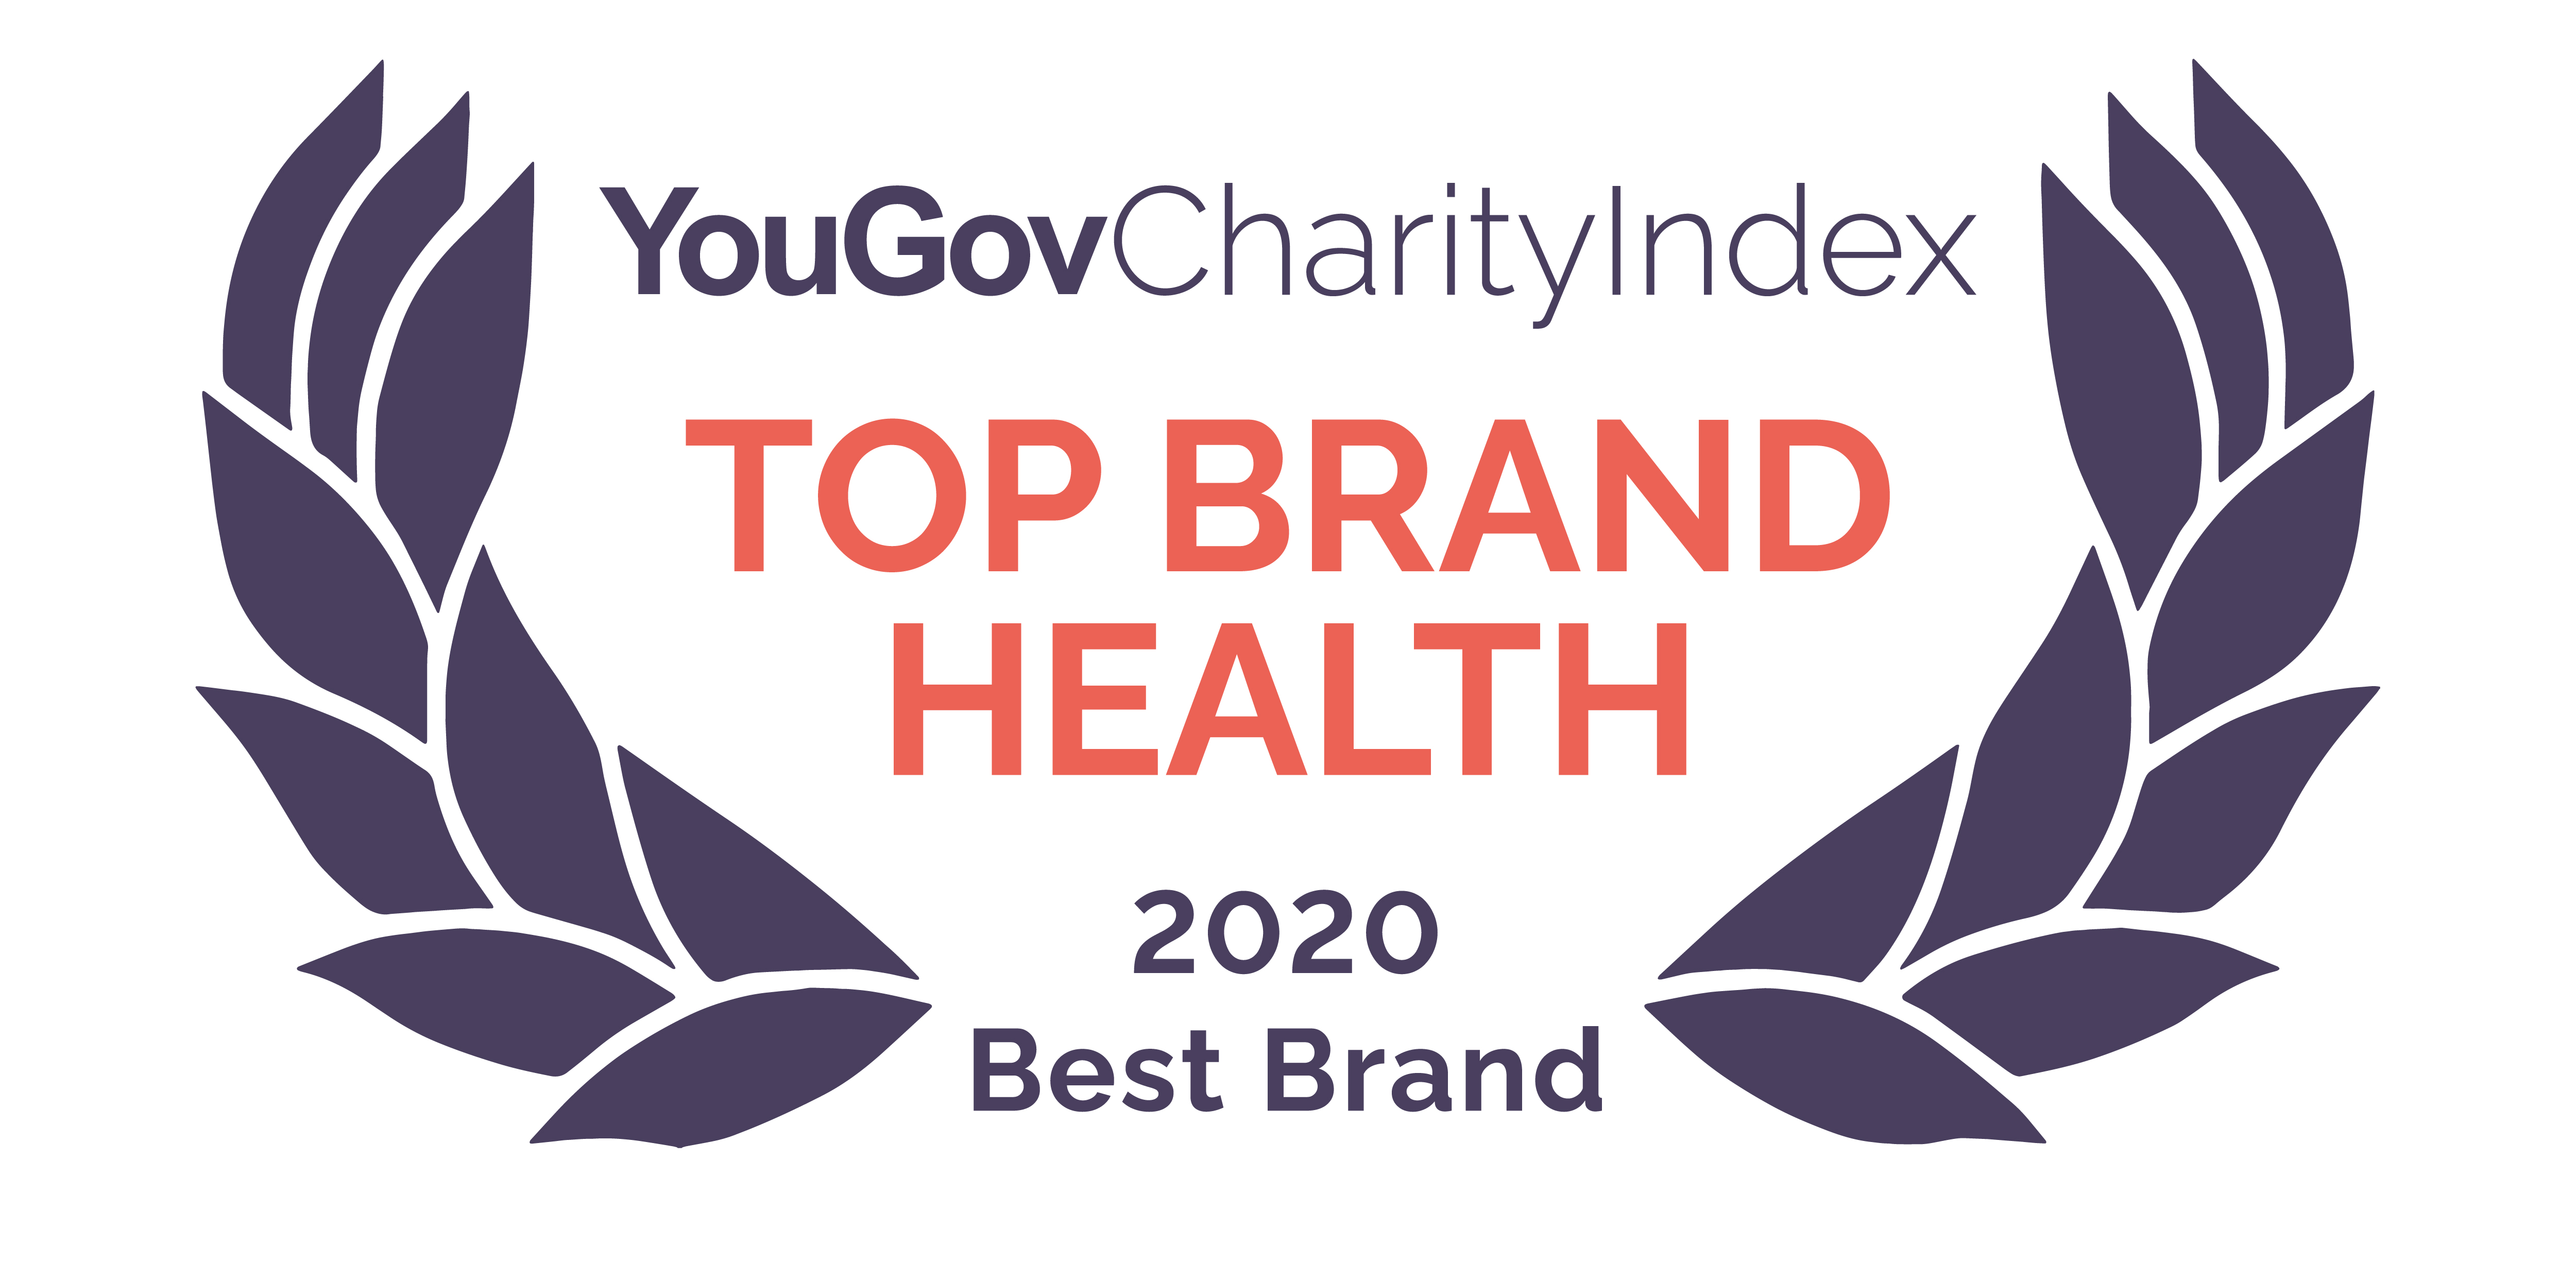 YouGov CharityIndex Top Brand Health logo